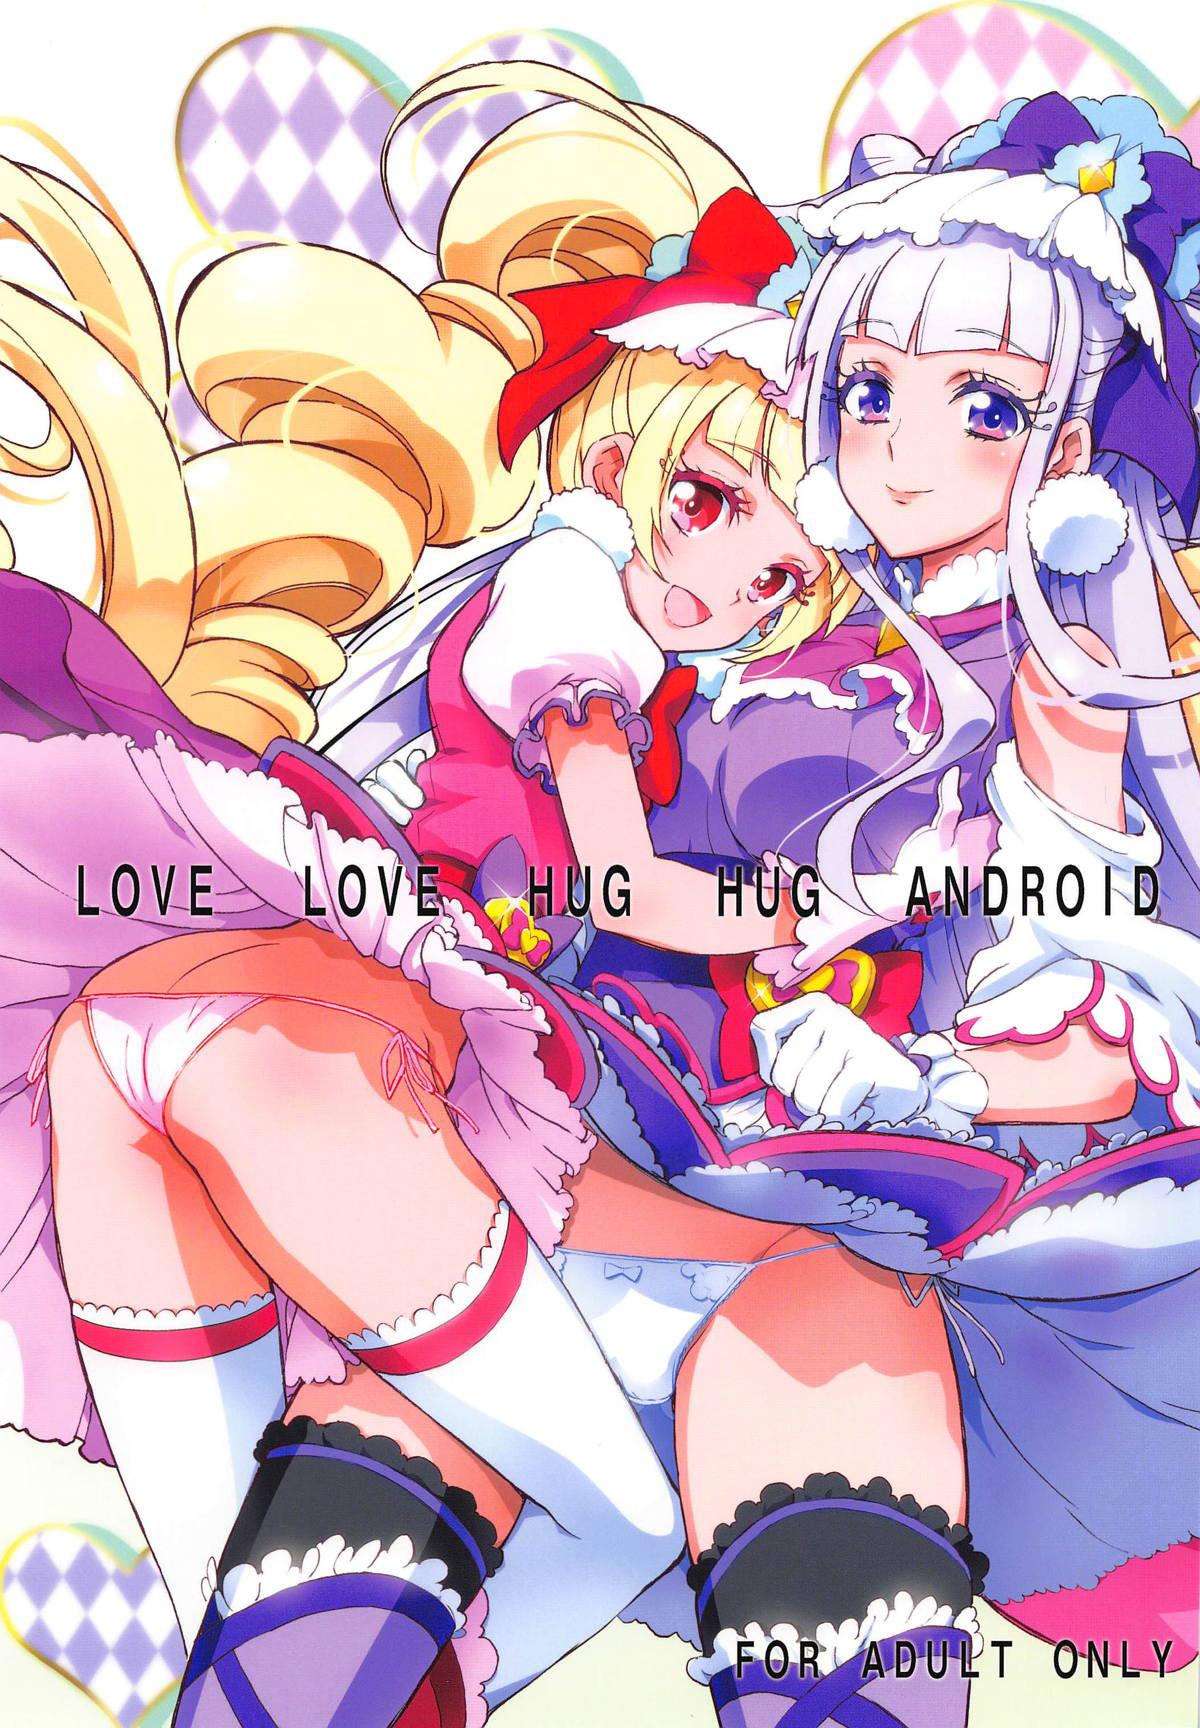 LOVE LOVE HUG HUG ANDROID 0